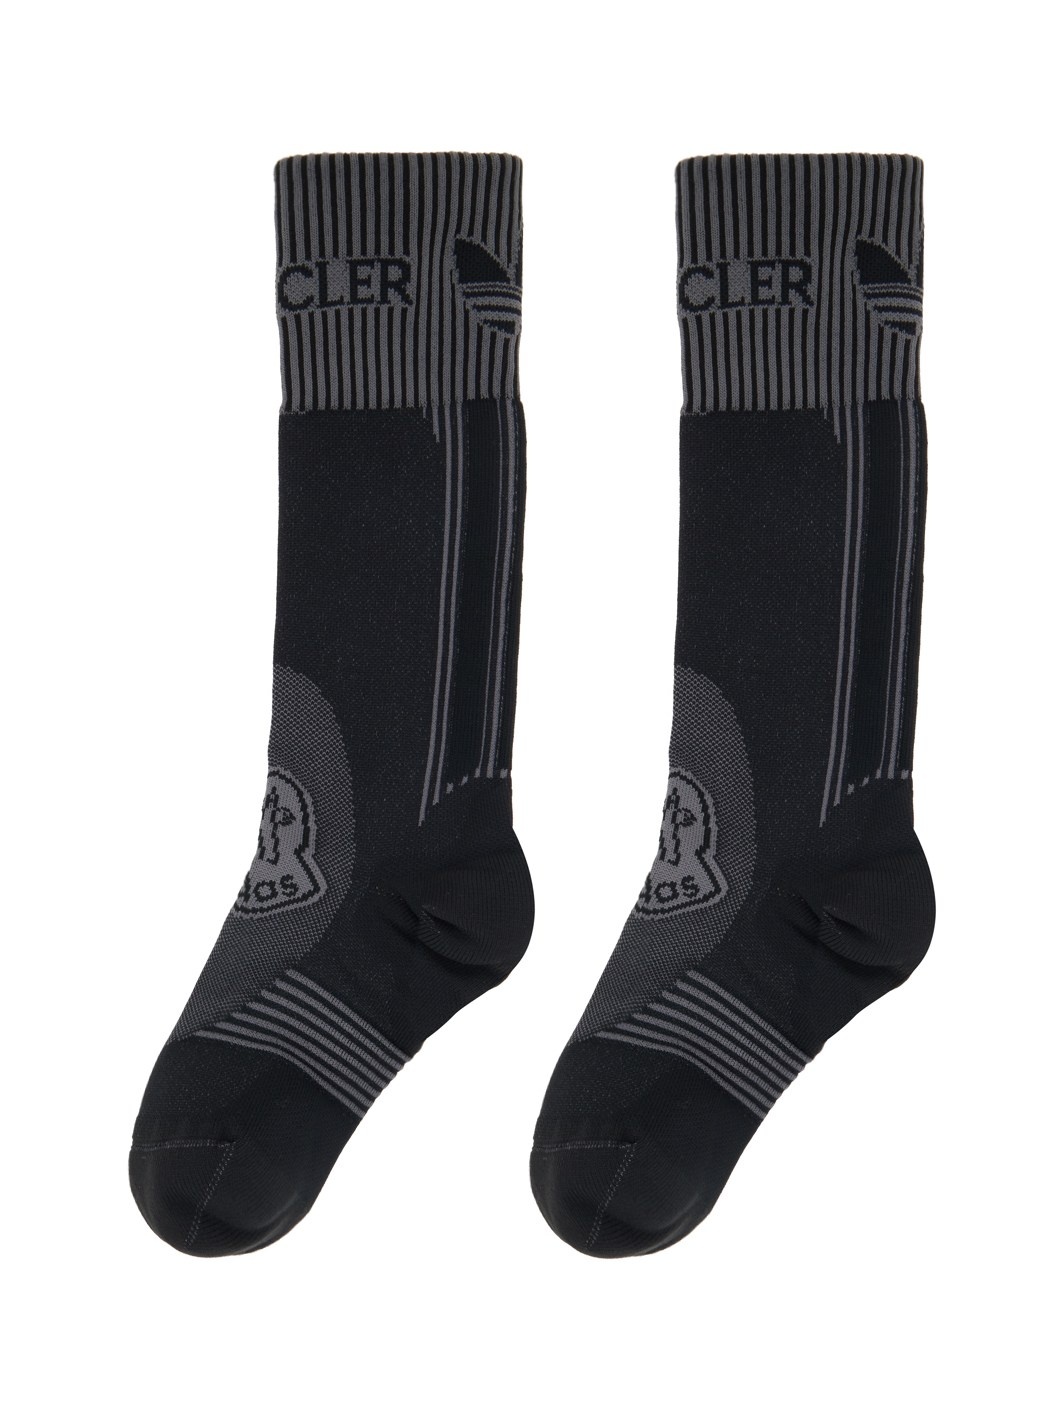 Moncler x adidas Originals Black Socks - 2